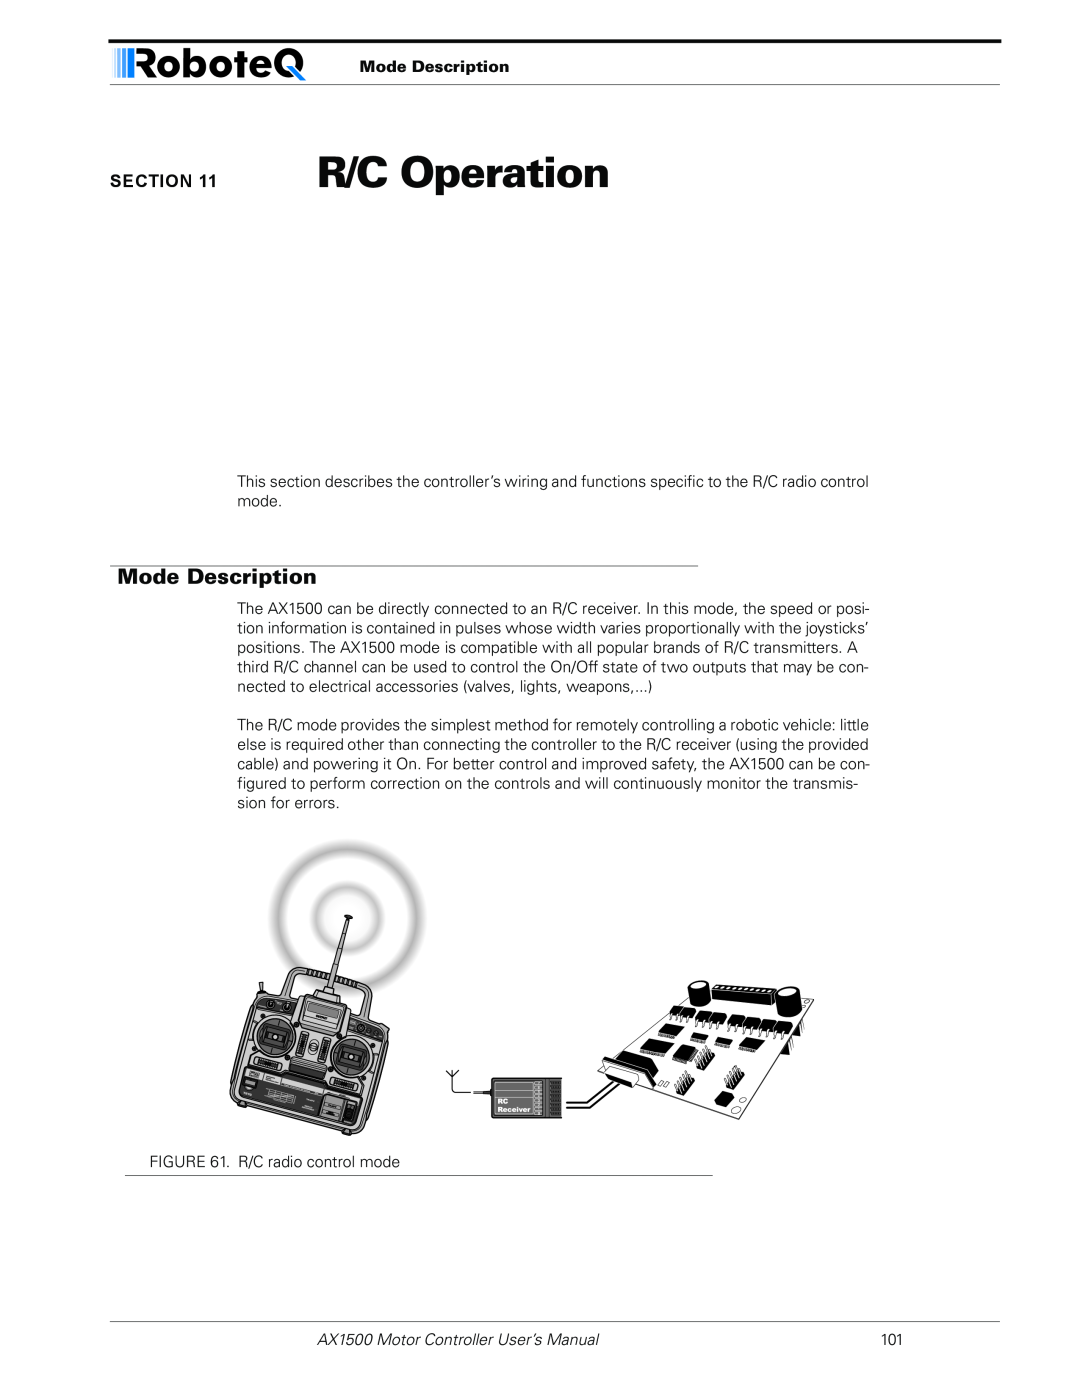 RoboteQ AX2550 user manual R/C Operation, Mode Description, AX1500 Motor Controller User’s Manual 